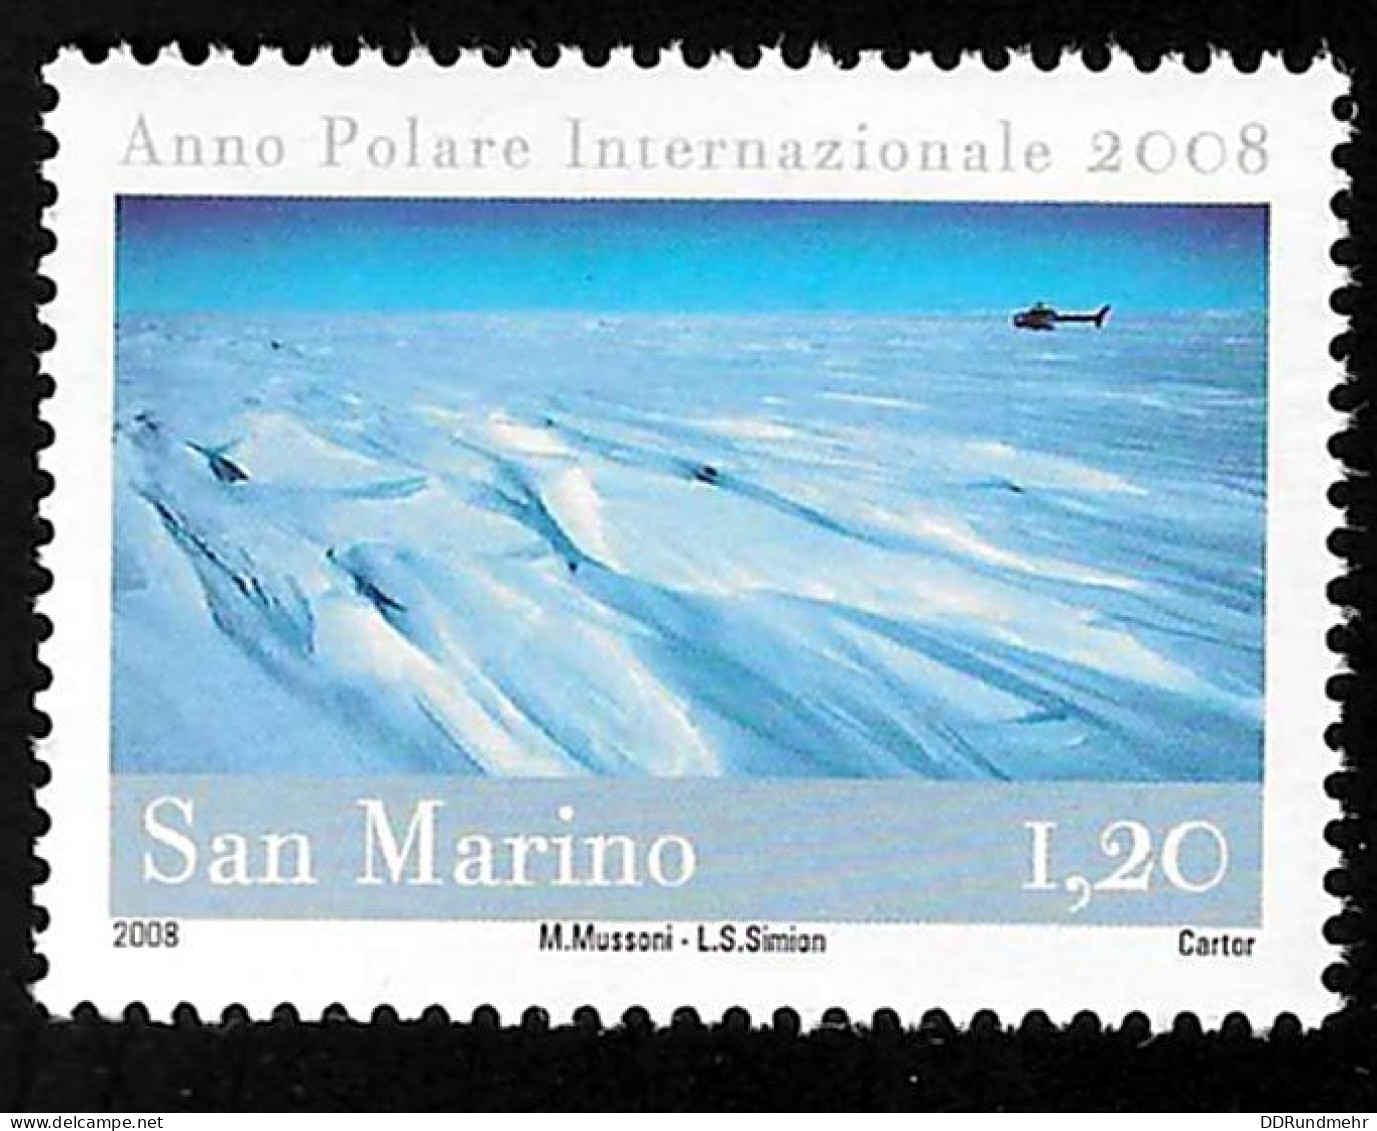 2008 Polar Year  Michel SM 2360 Stamp Number SM 1770 Yvert Et Tellier SM 2153 Stanley Gibbons SM 2186 Xx MNH - Unused Stamps